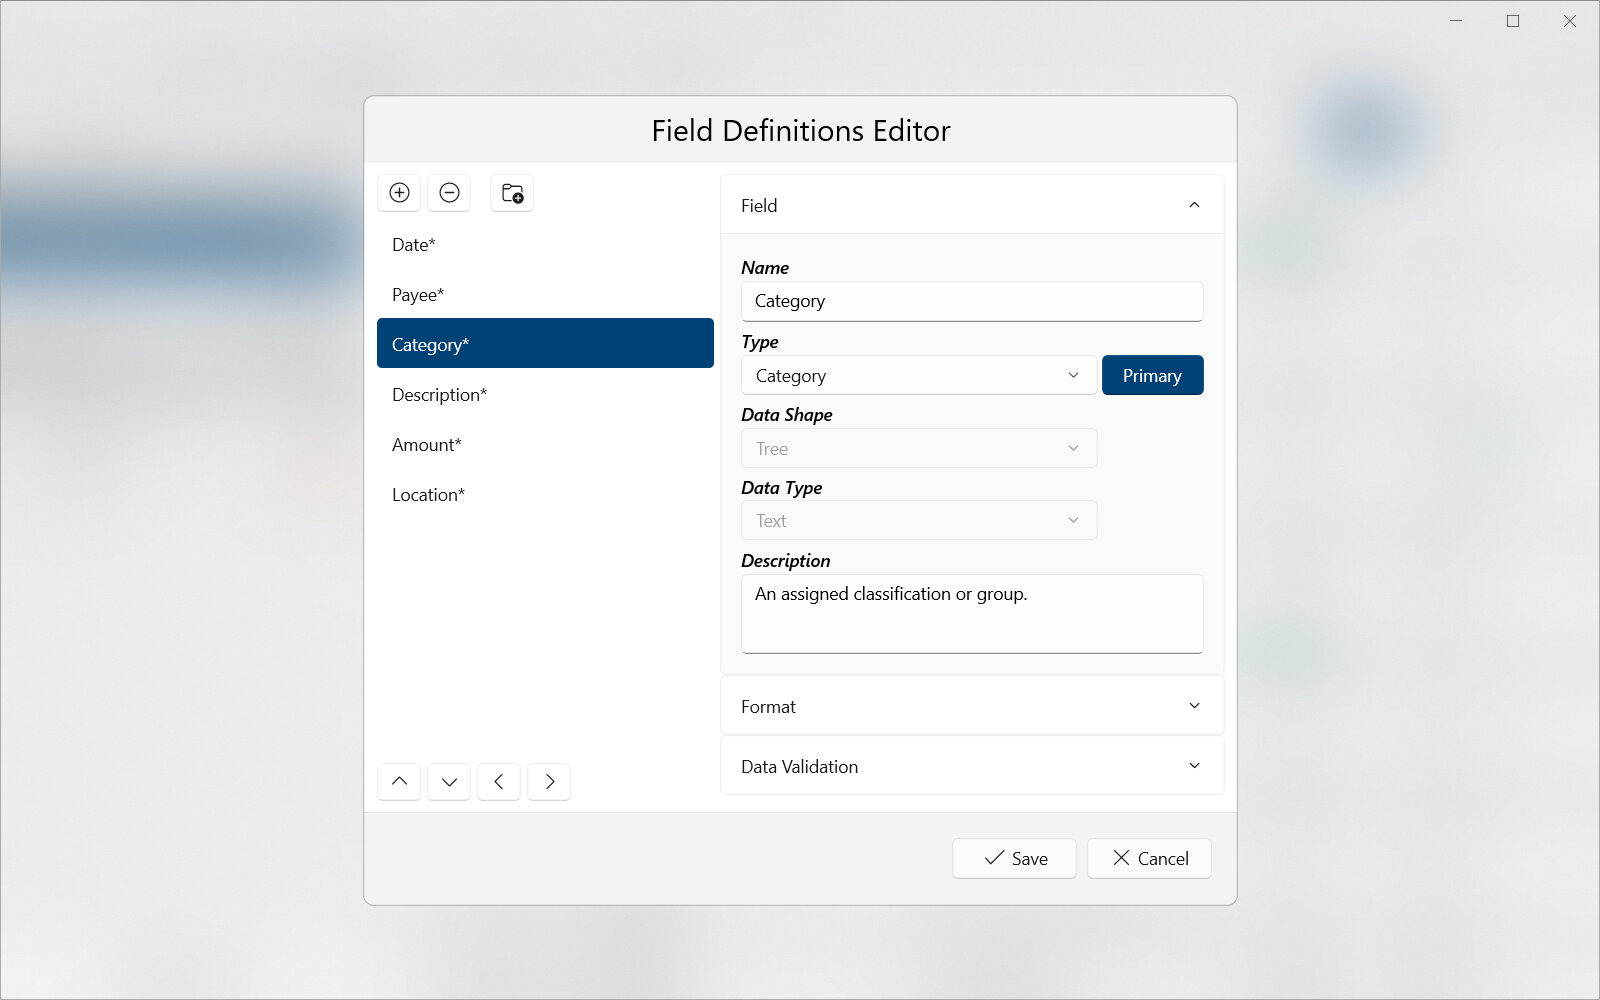 Field Definitions Editor